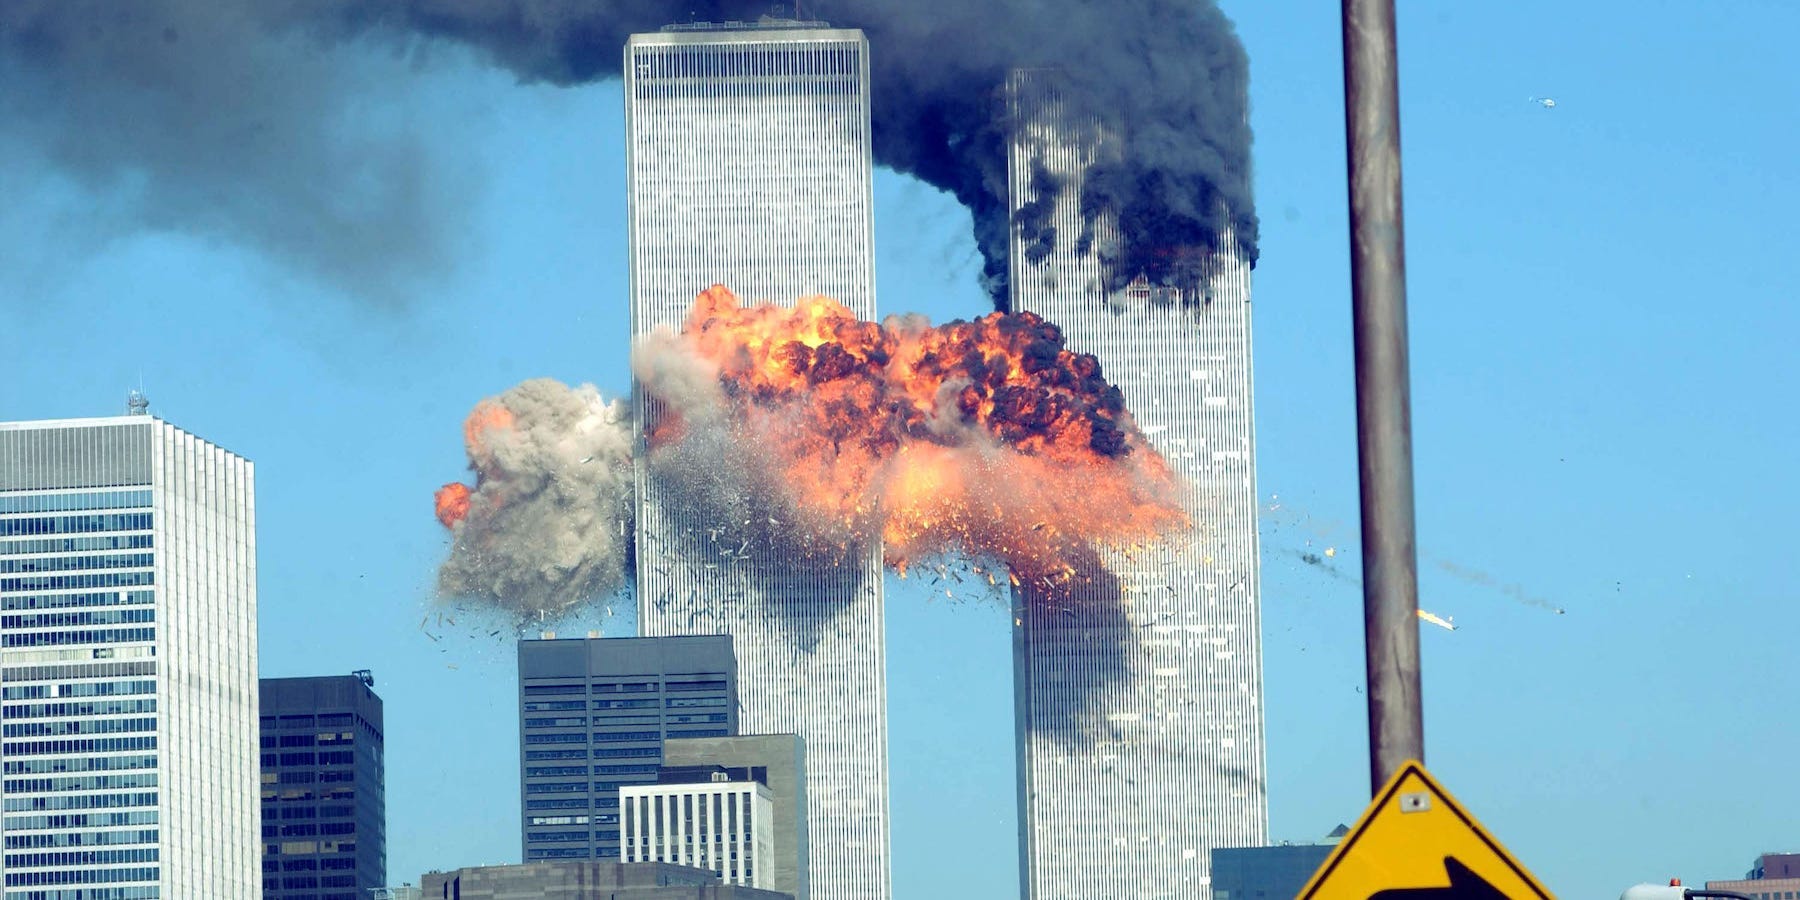 September 11 9/11 attacks